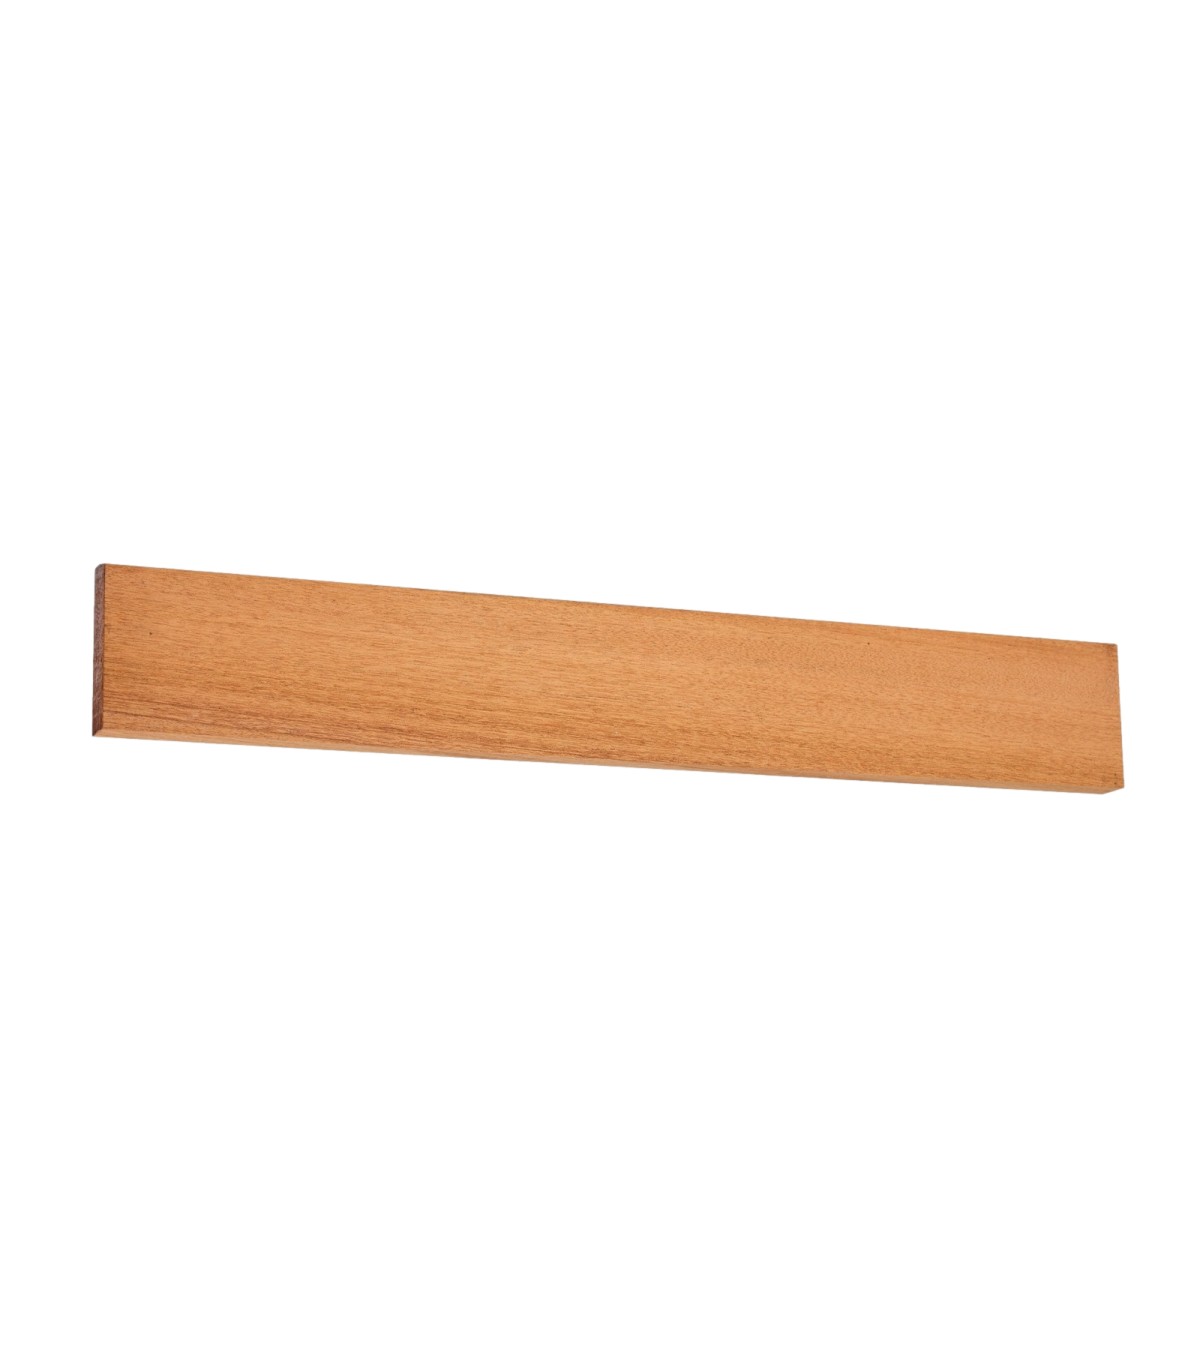 Sapele mahogany neck or heel blank 650x85x22